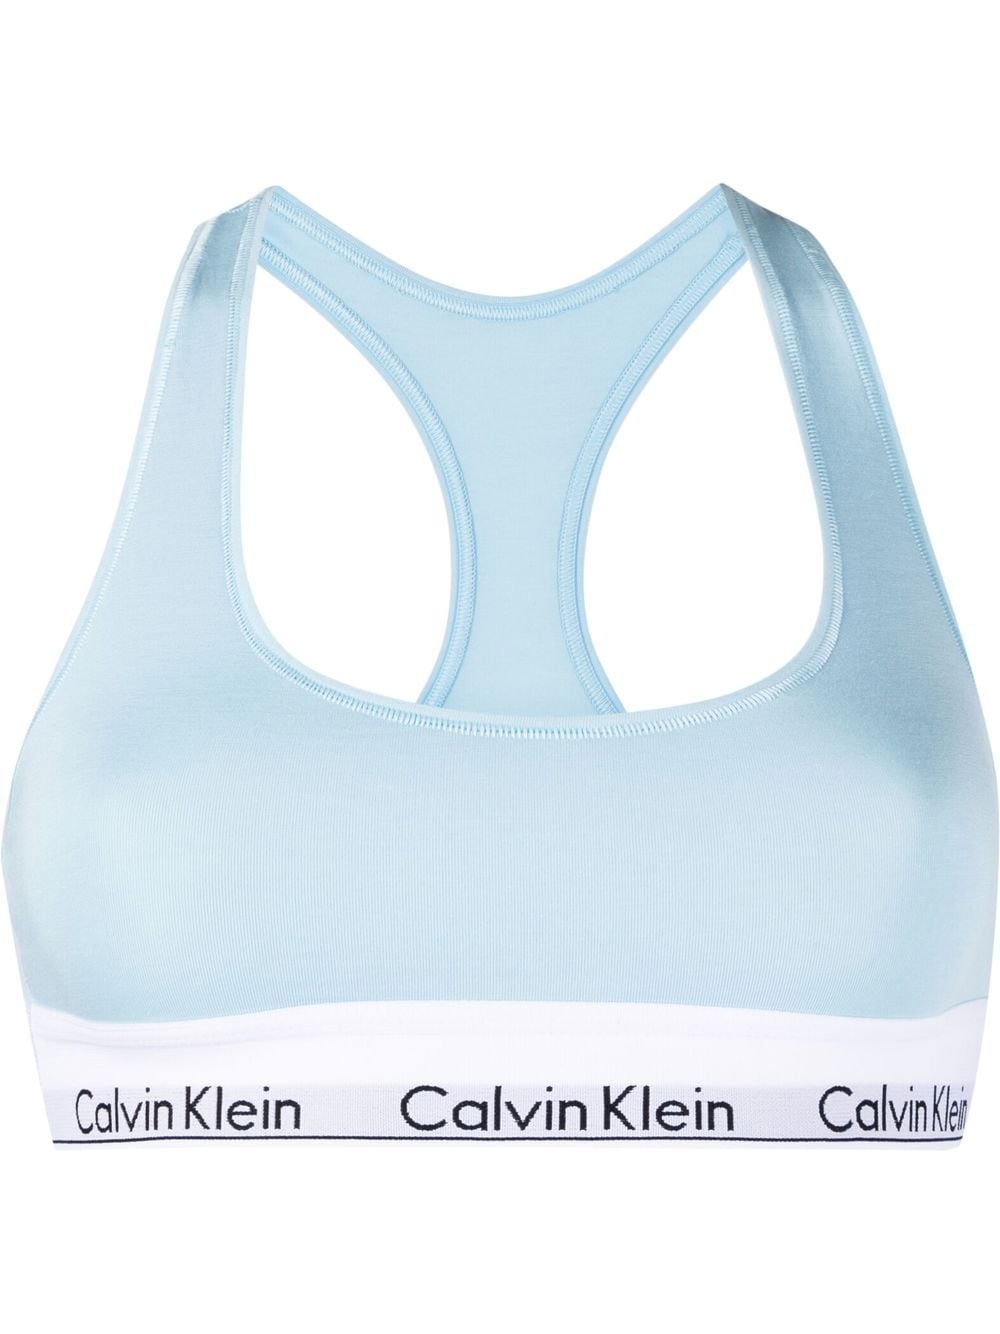 New Calvin Klein Performance XS Sports Bra Blue Strappy Back X-Small NWT